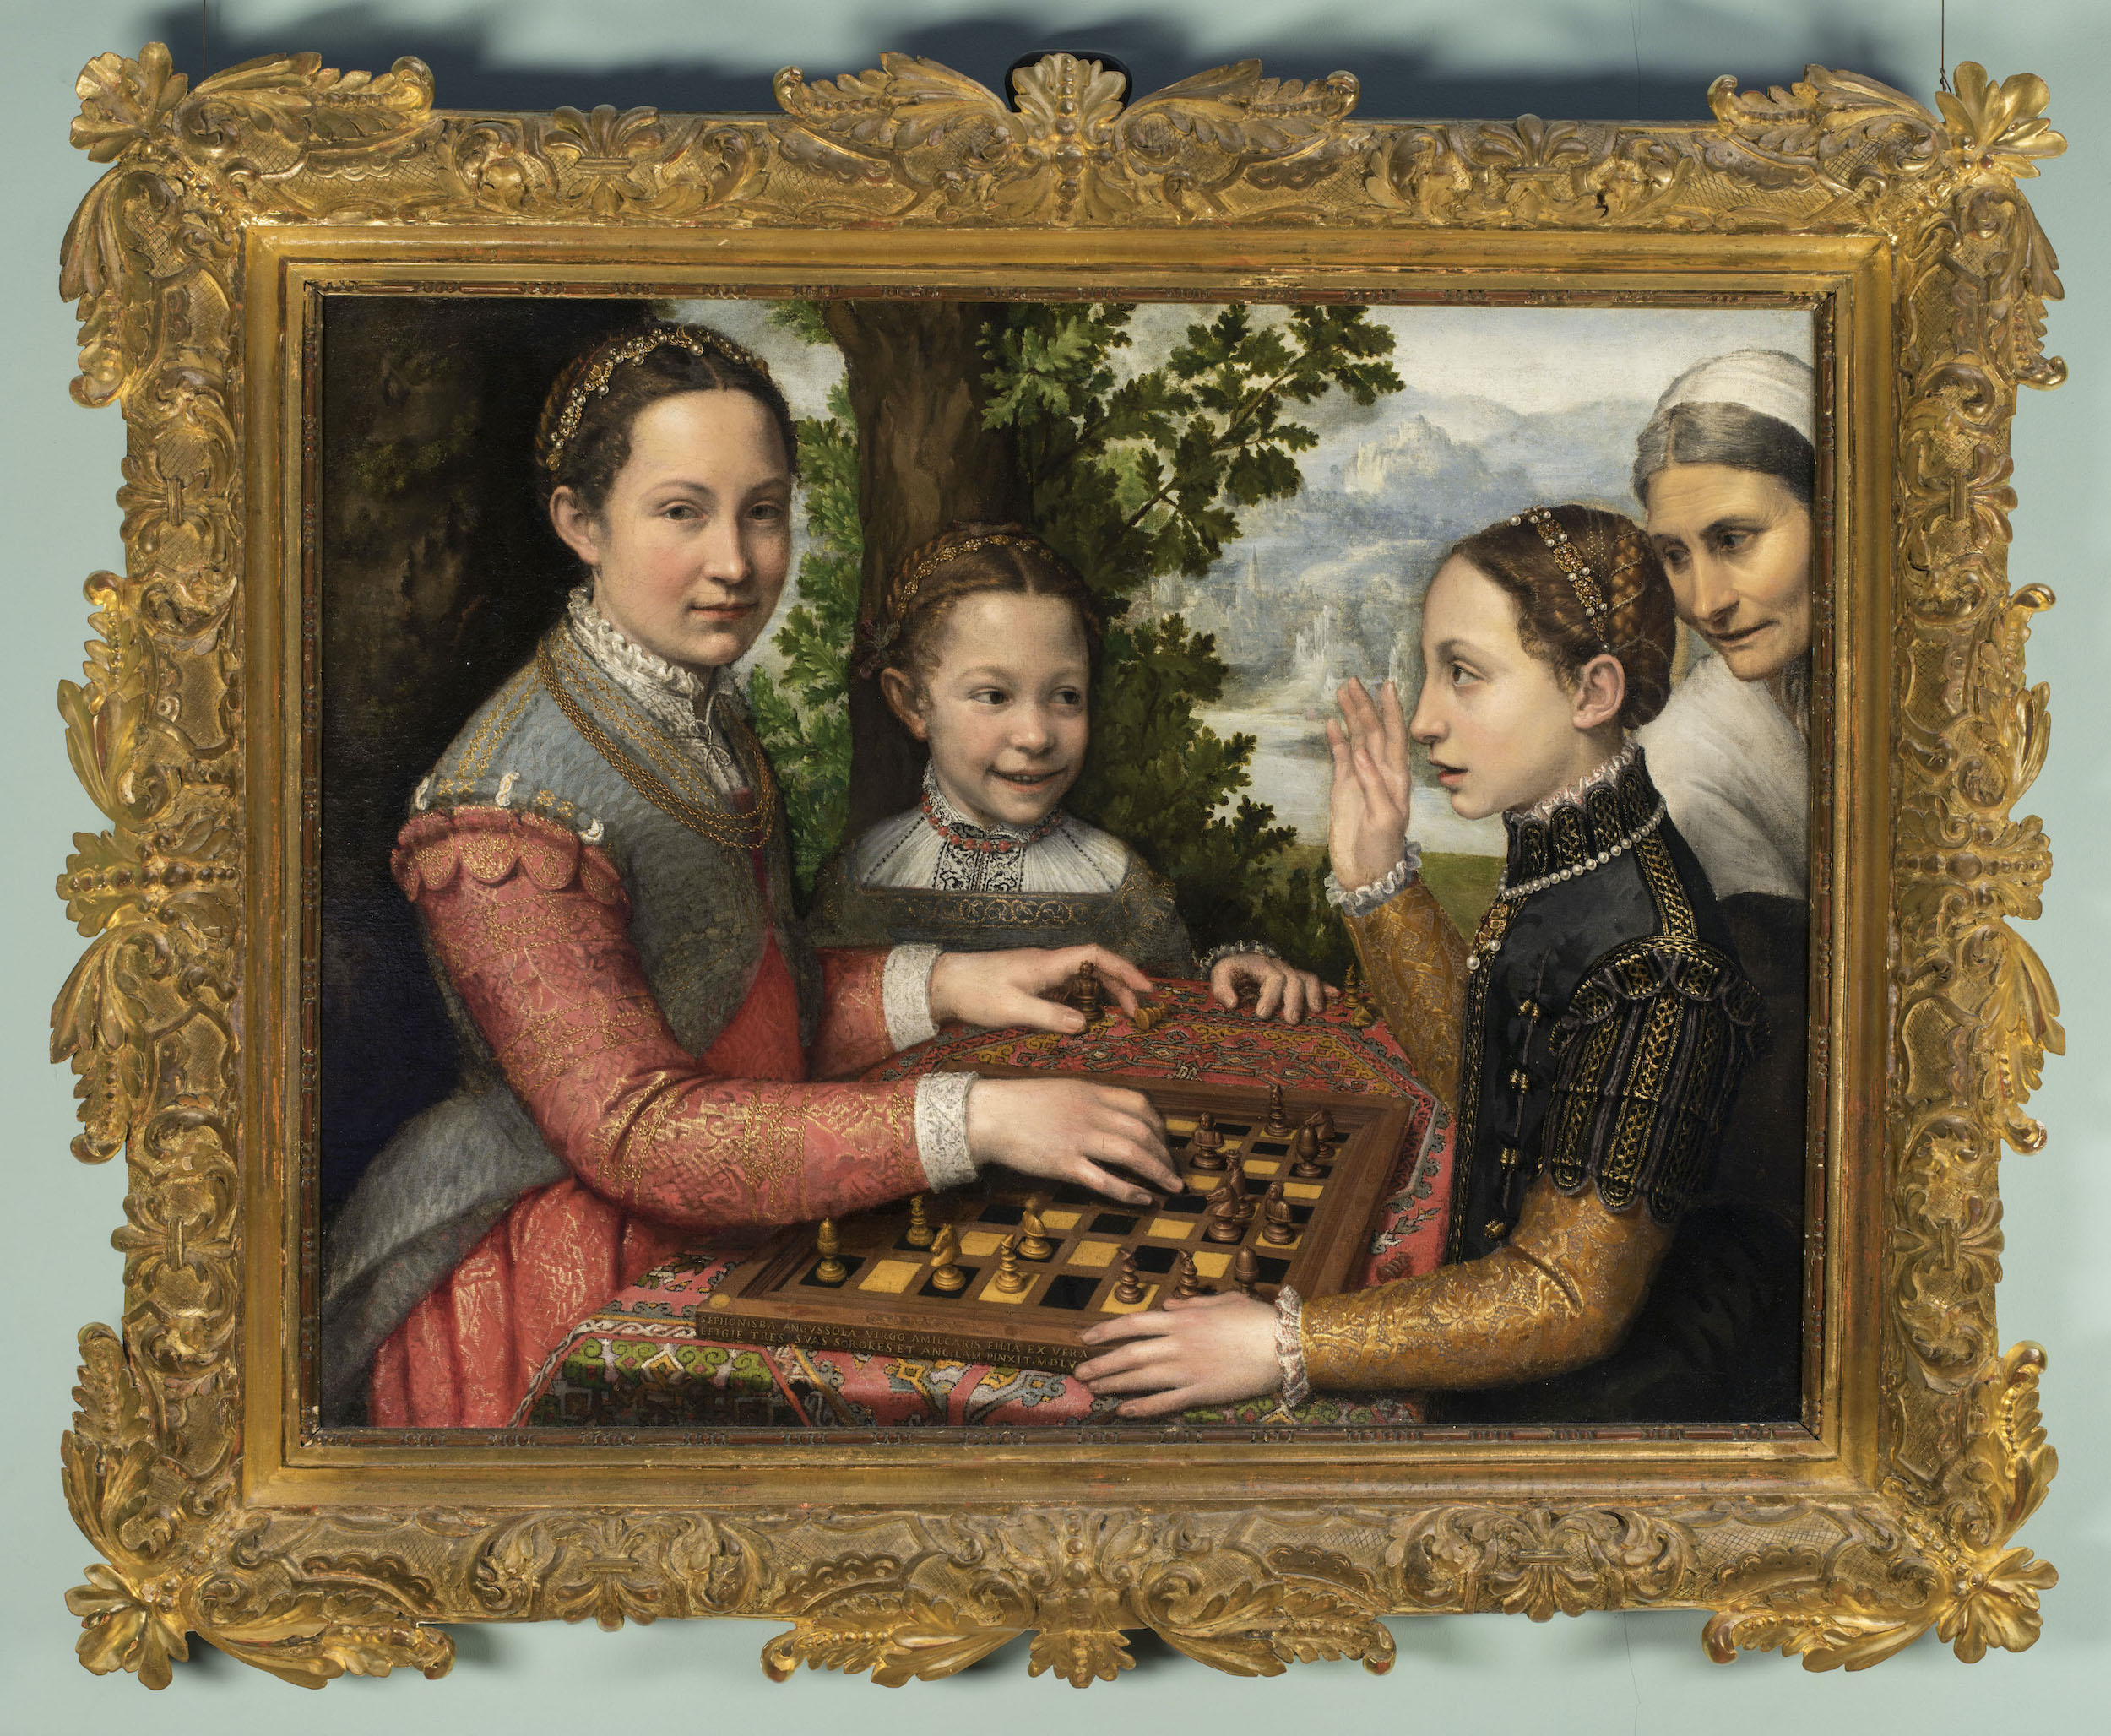 Partita a scacchi by Sofonisba Anguissola - 1555 - 72 × 97 cm 